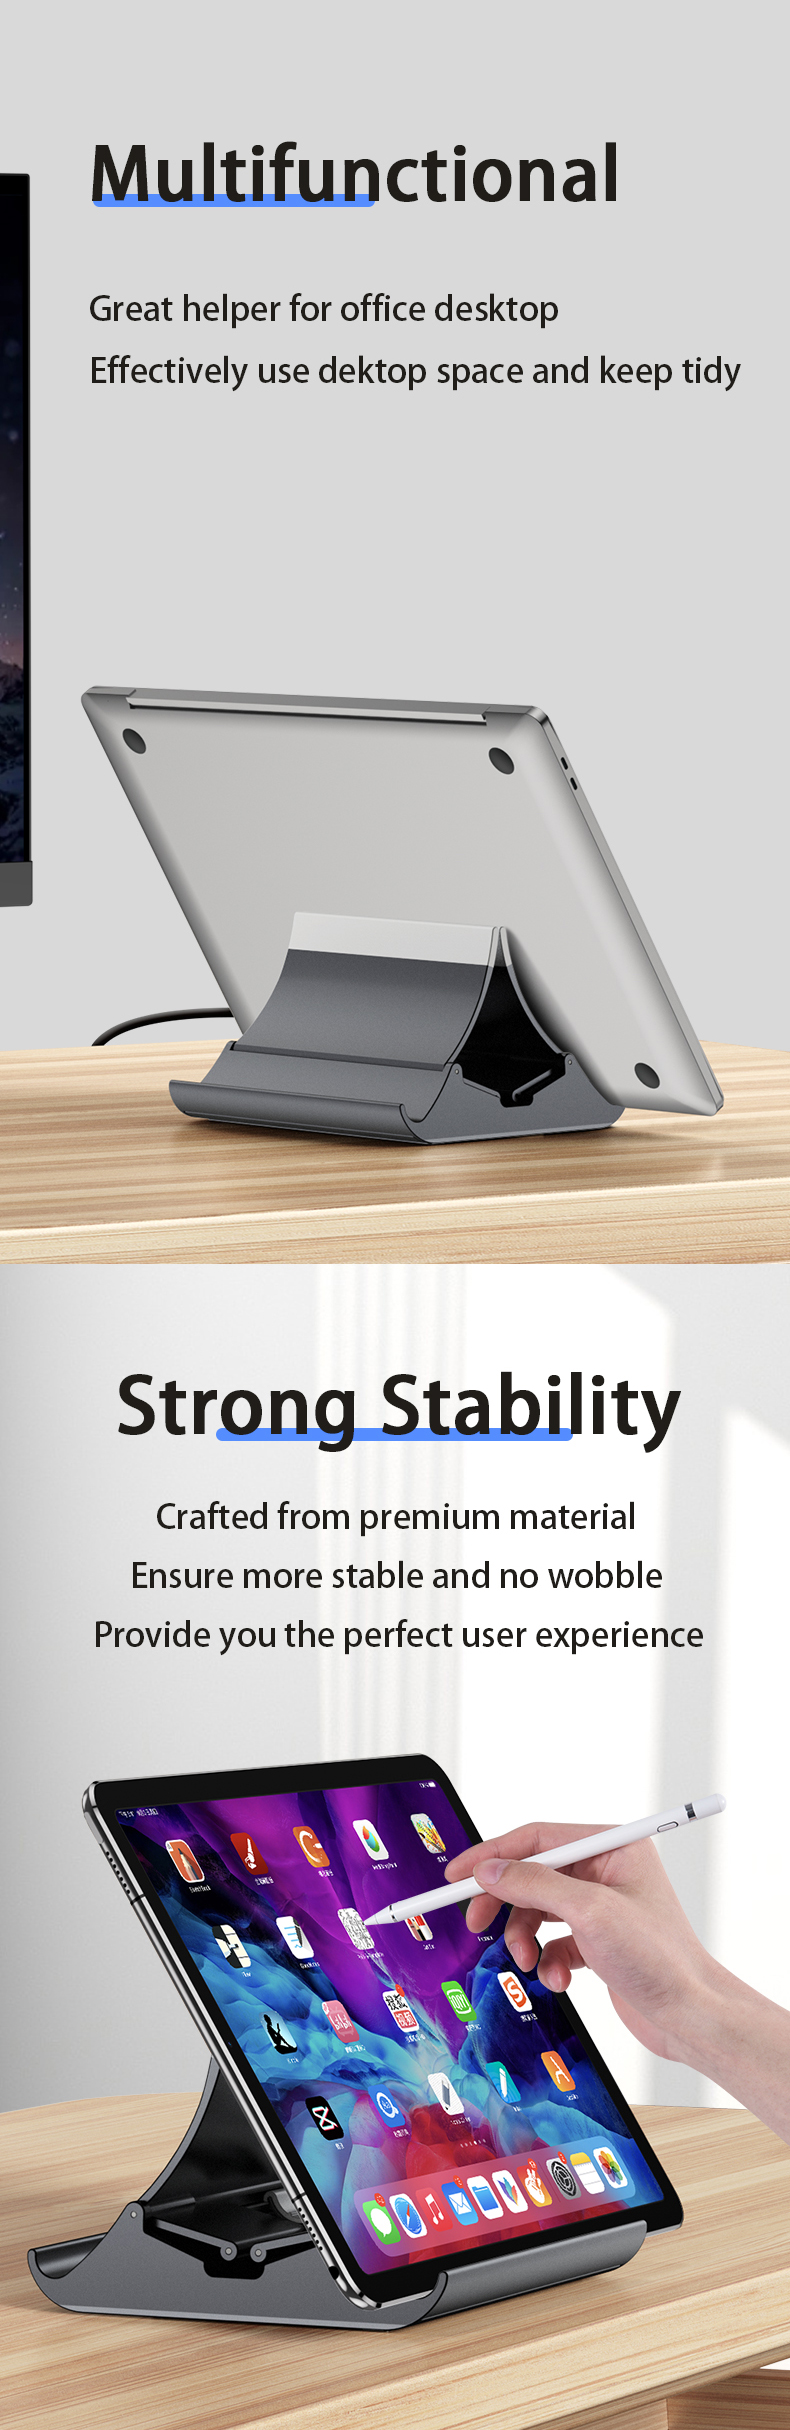 Adjustable-Laptop-Stand-Vertical-Gravity-Ergonomic-Desktop-Storage-for-Laptop-Moble-Phone-Tablet-Not-1968727-4